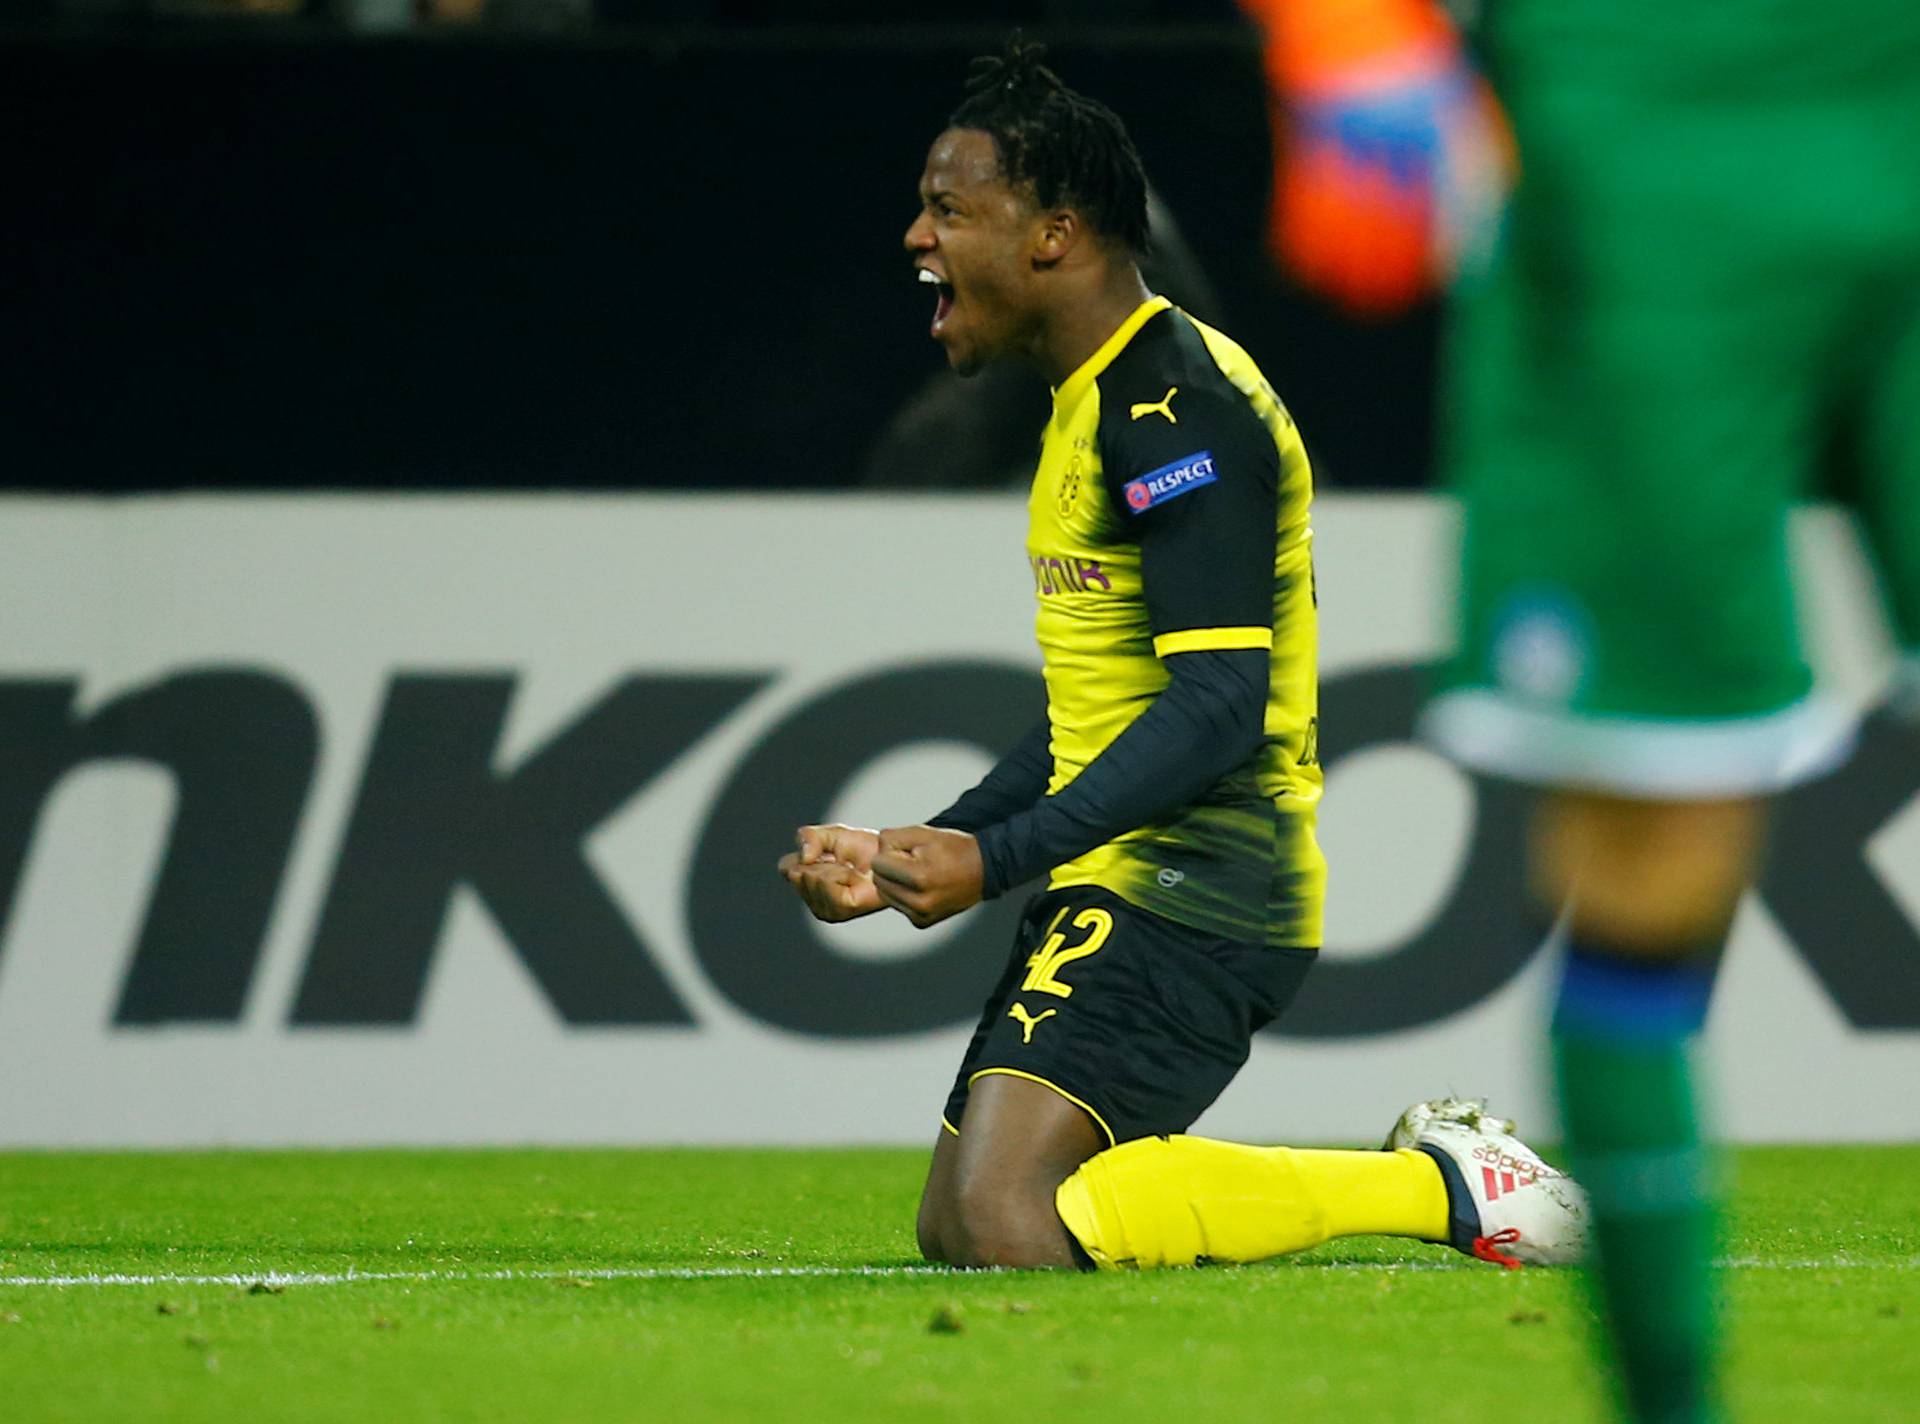 Europa League Round of 32 First Leg - Borussia Dortmund vs Atalanta